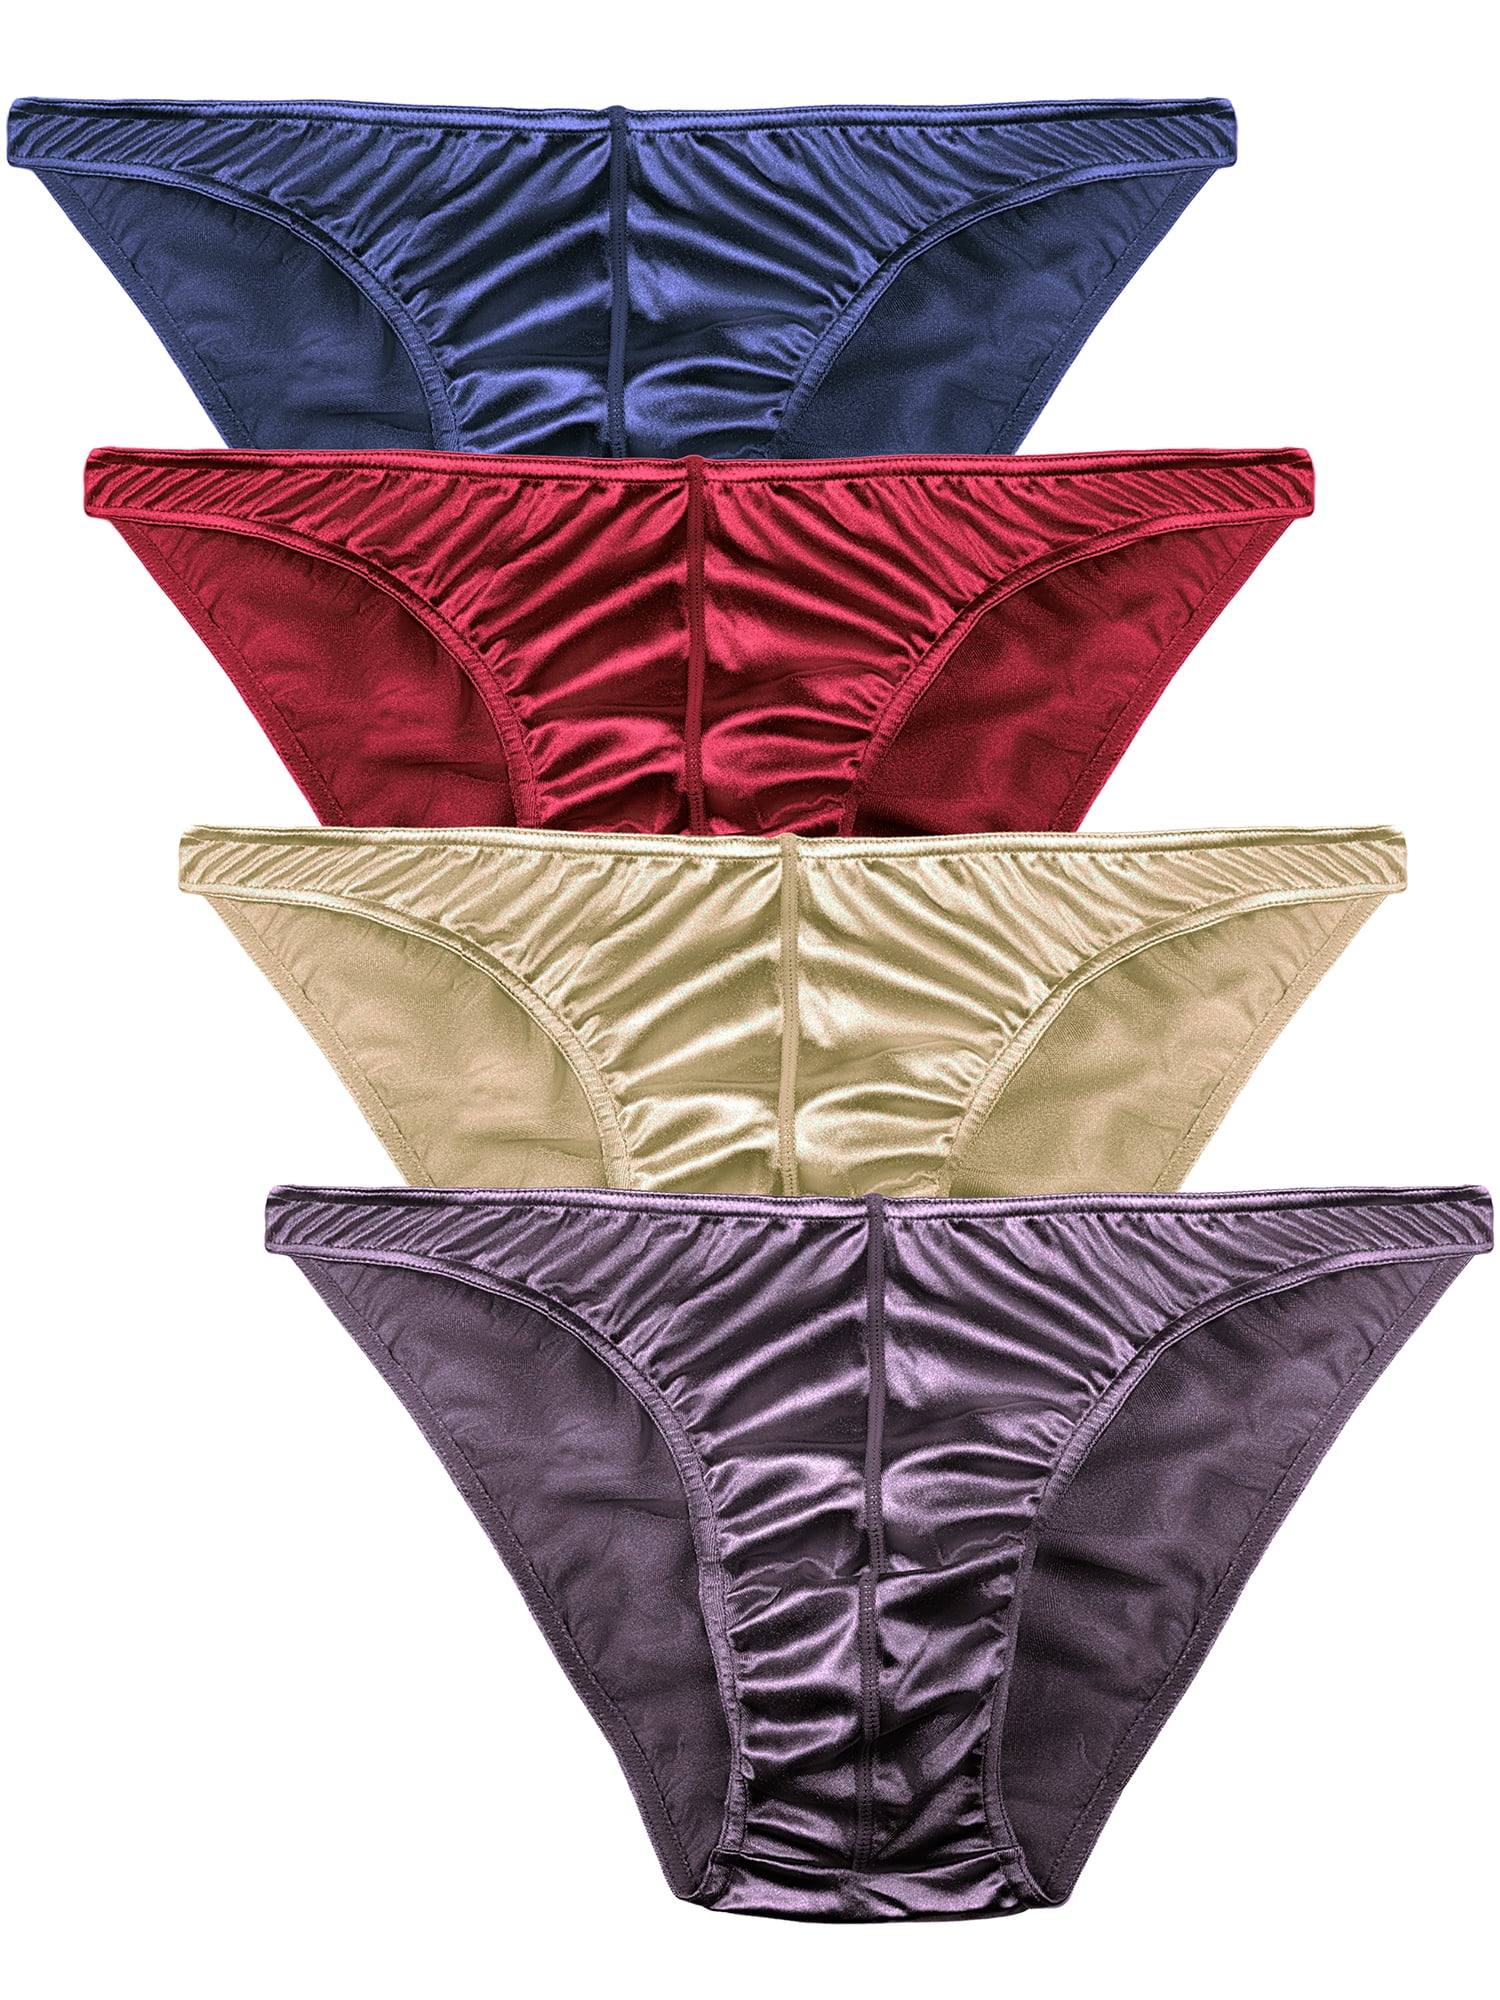 Men's Underwear Satin Silky Sexy Bikini Small to Plus Sizes Multi-Pack 